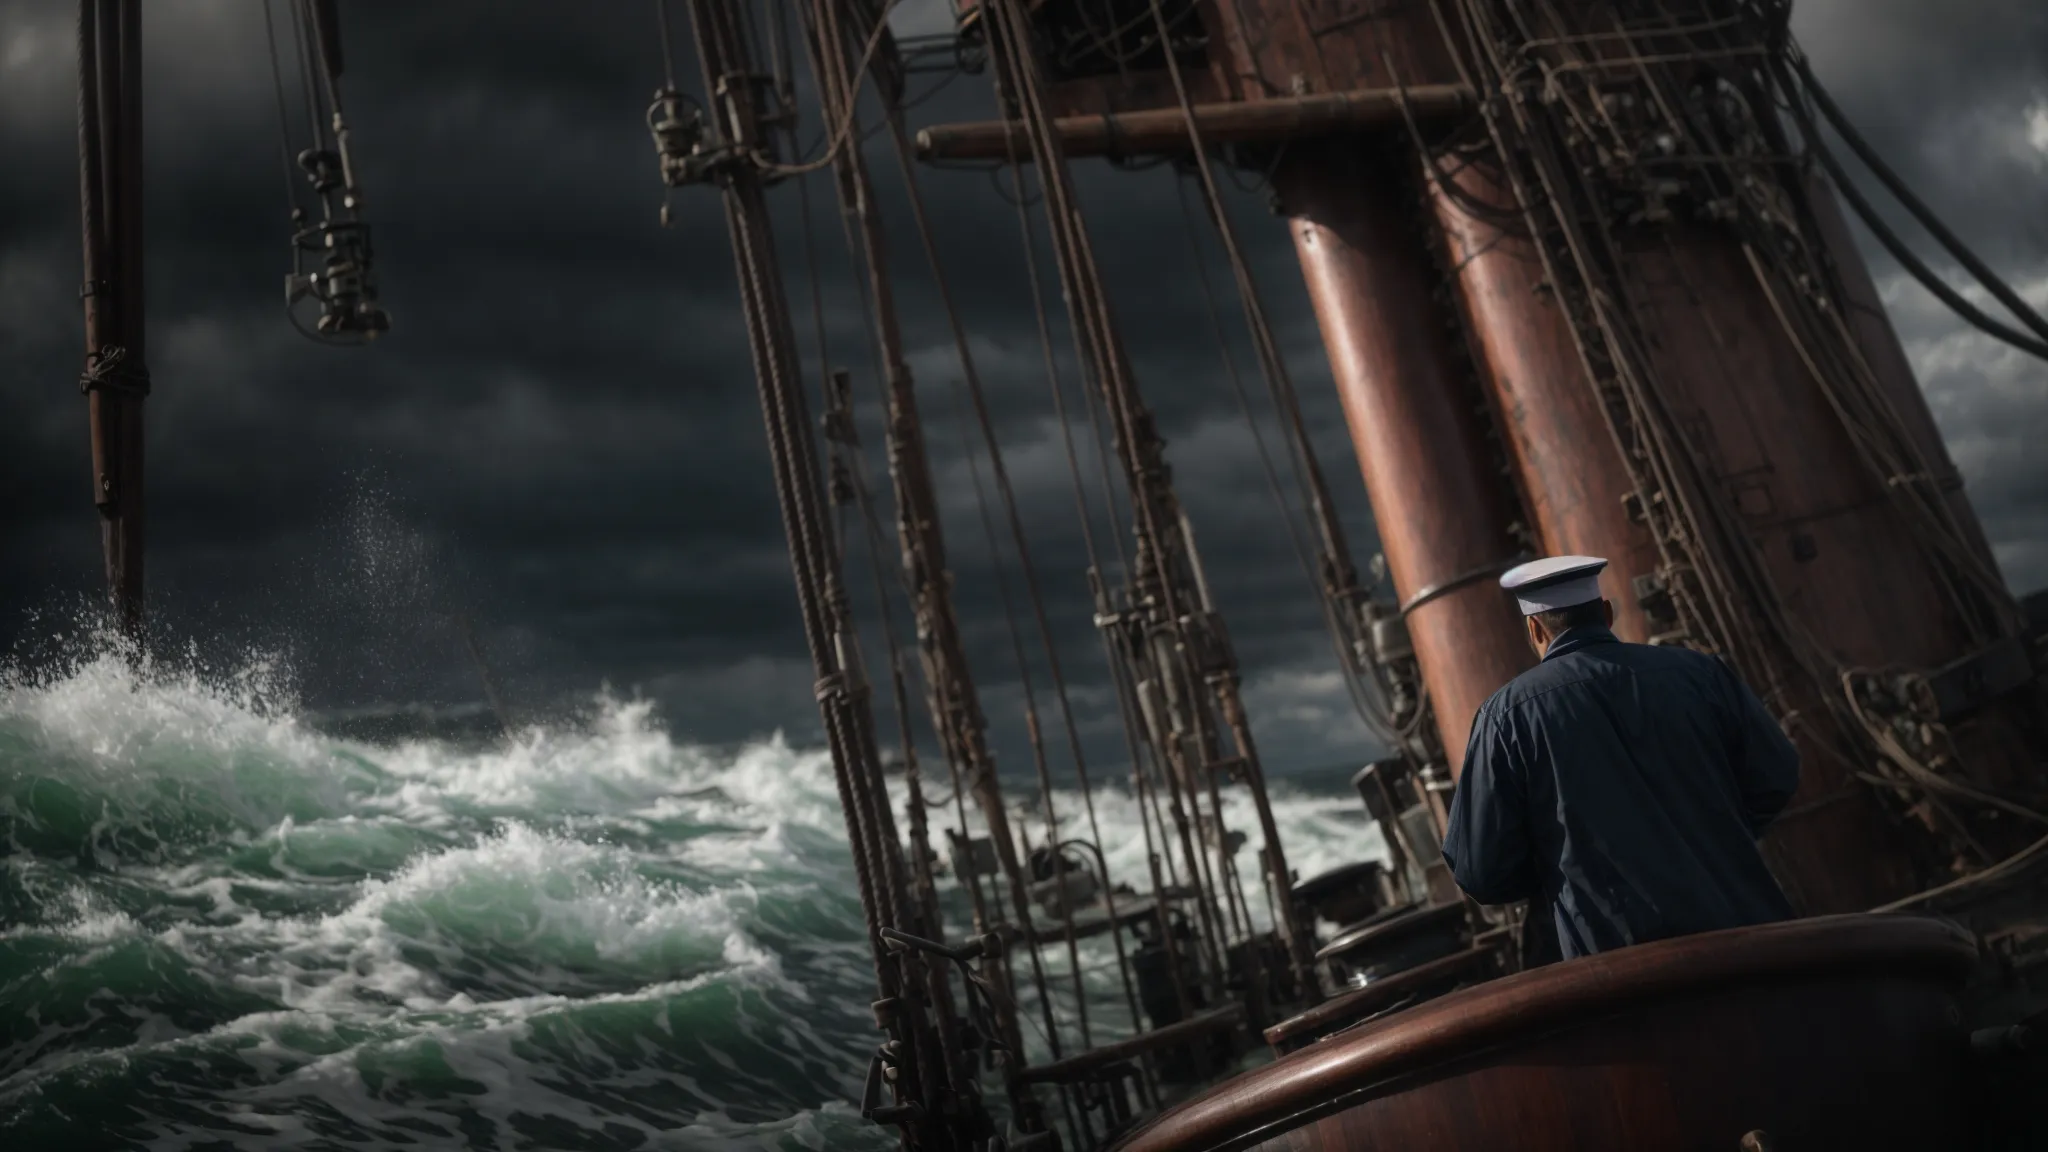 a captain steadies the wheel of a ship amidst a tumultuous sea, eyes fixed on the horizon.